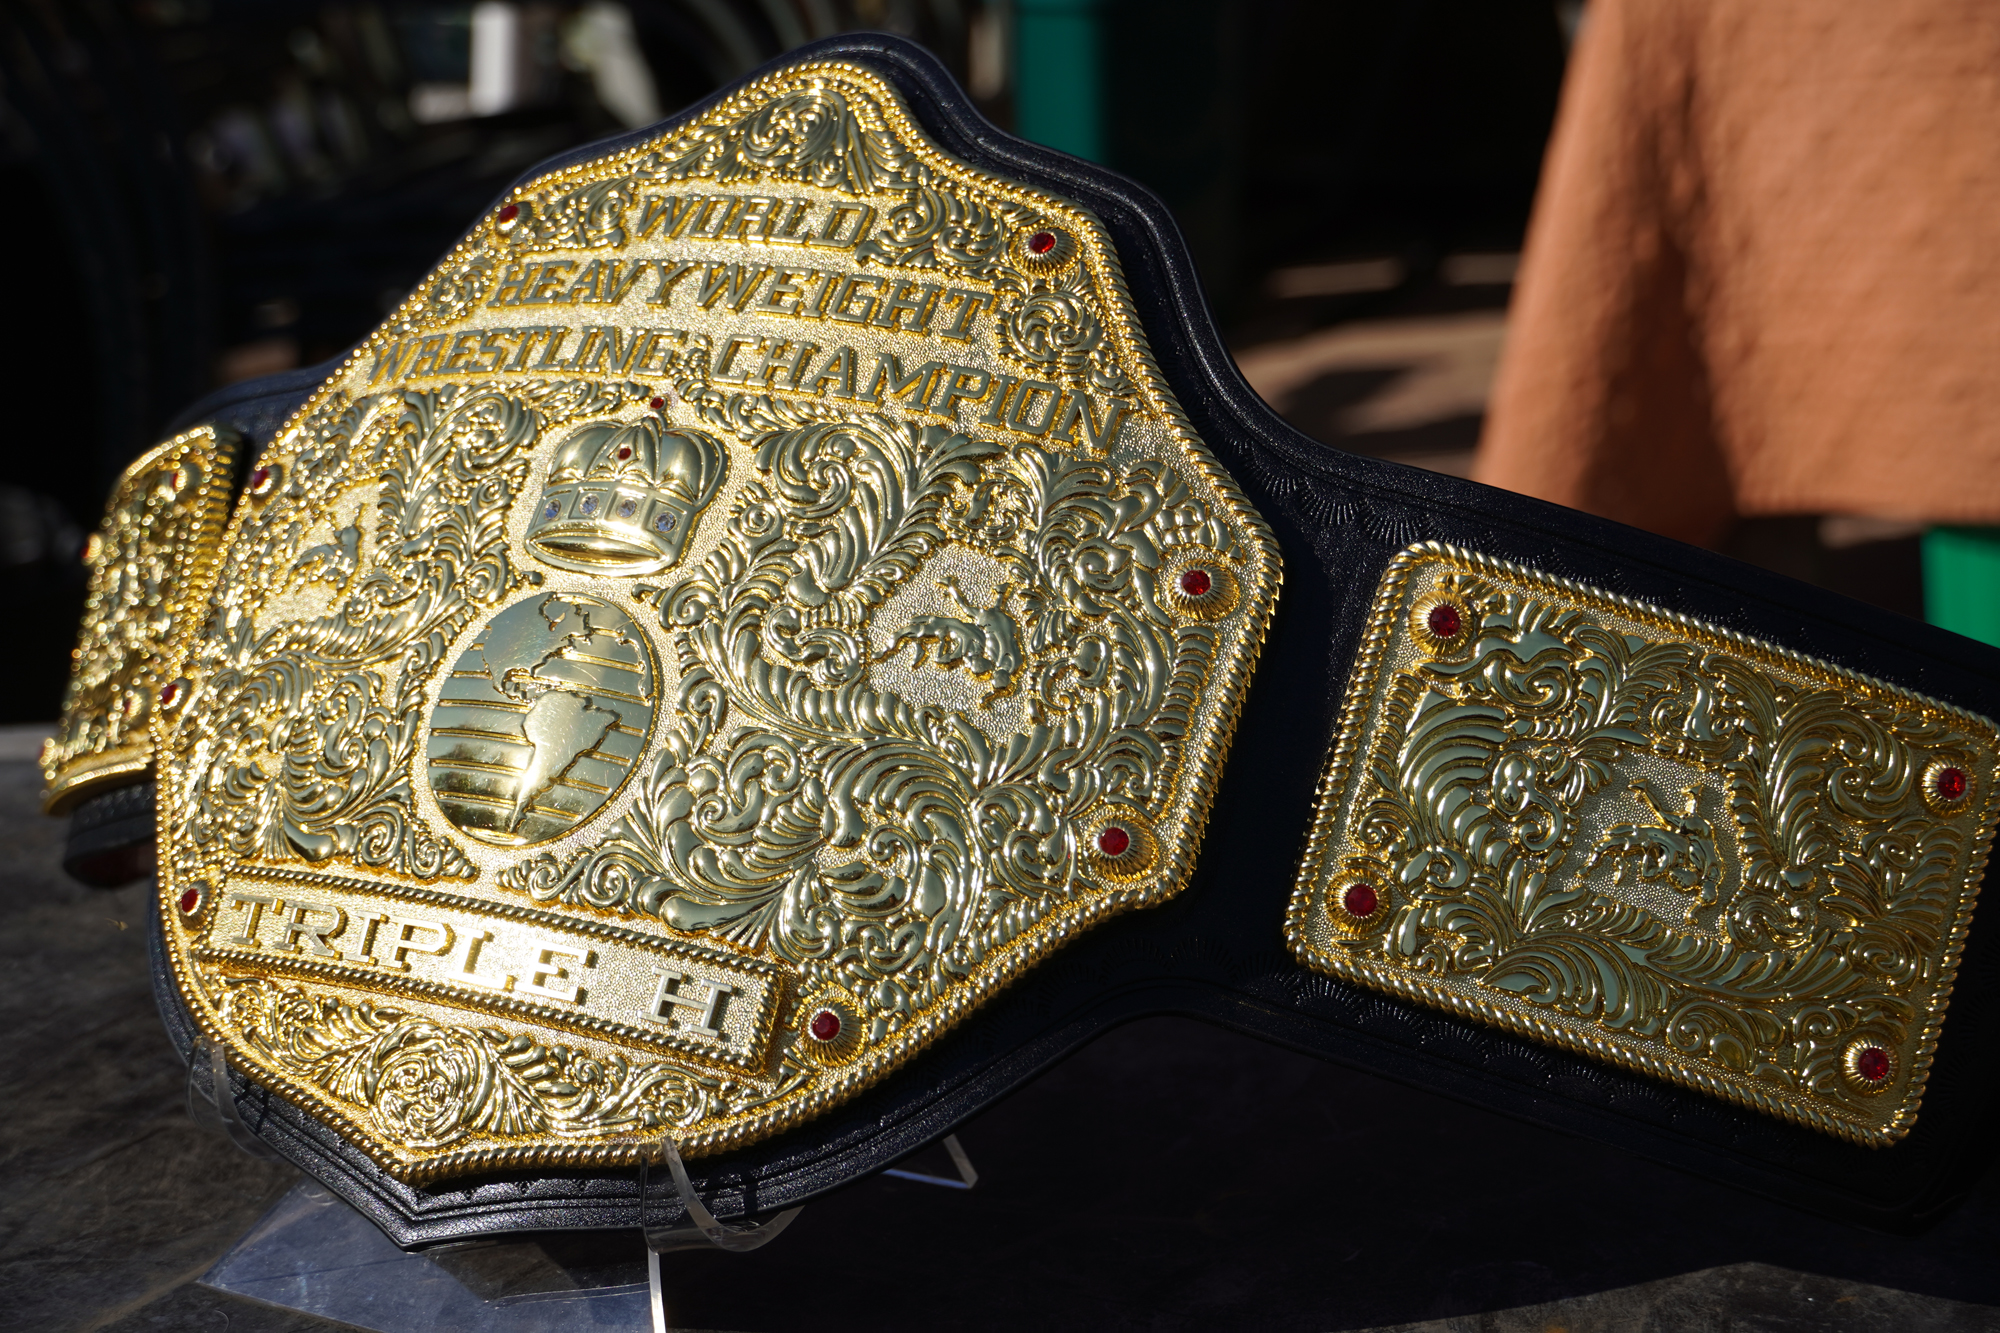 Fandu Belts Minor Flaws Big Gold Heavyweight Championship Wrestling Title Belt 